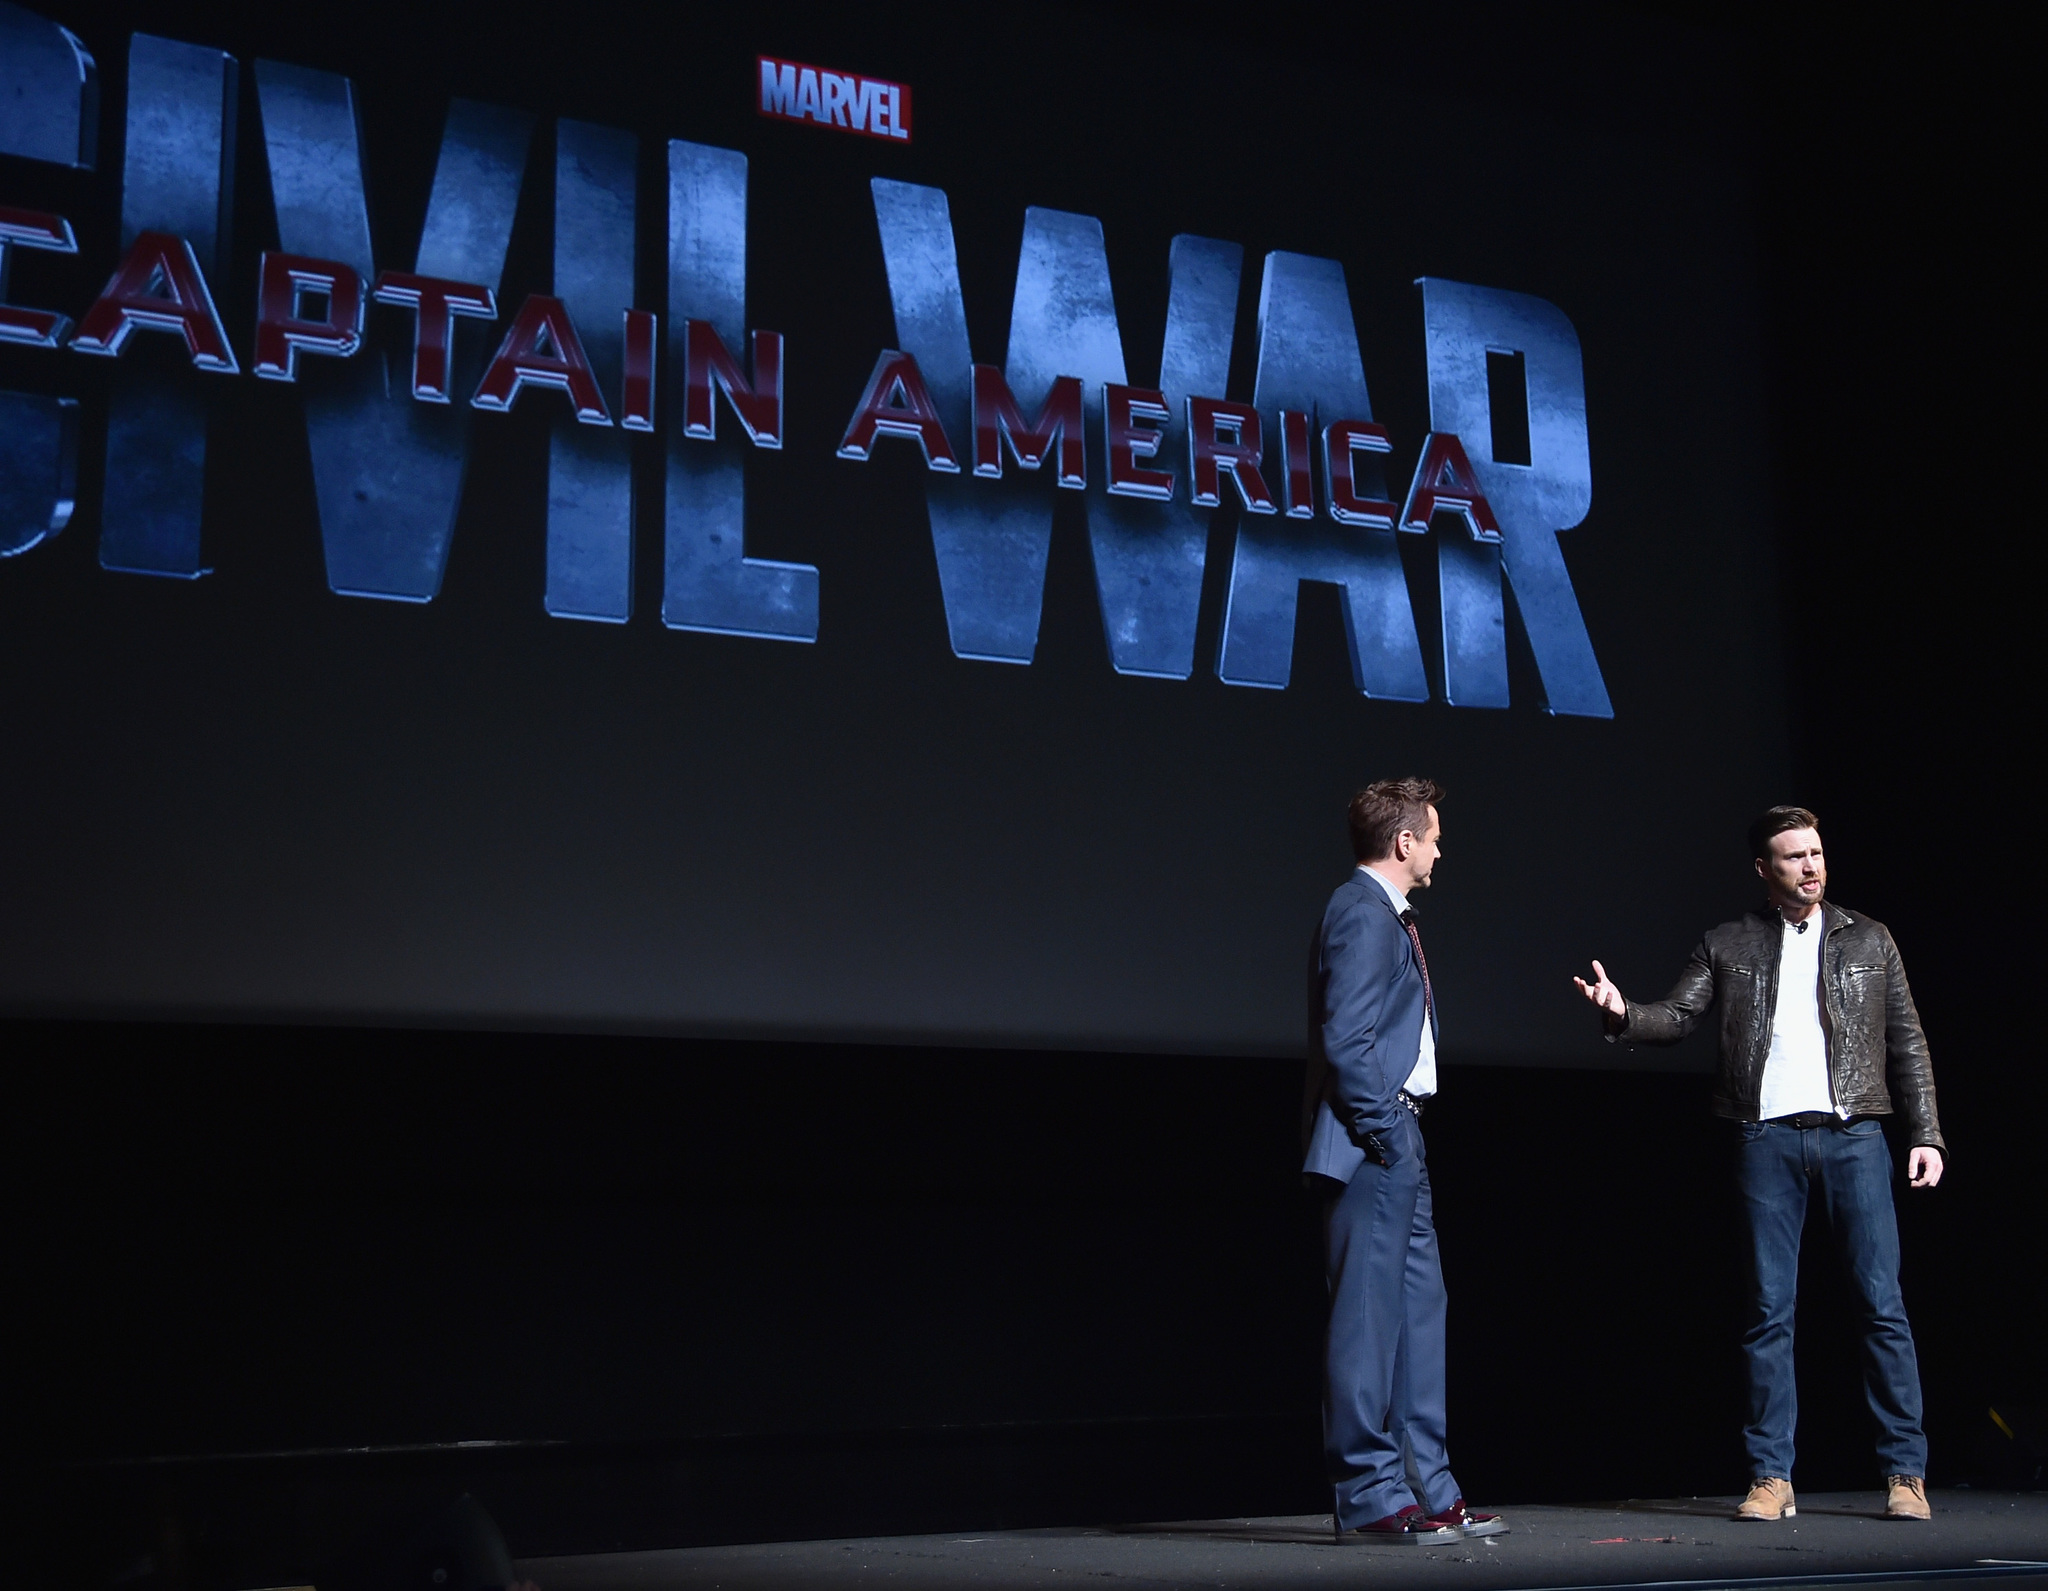 Robert Downey Jr. and Chris Evans at event of Captain America: Civil War (2016)